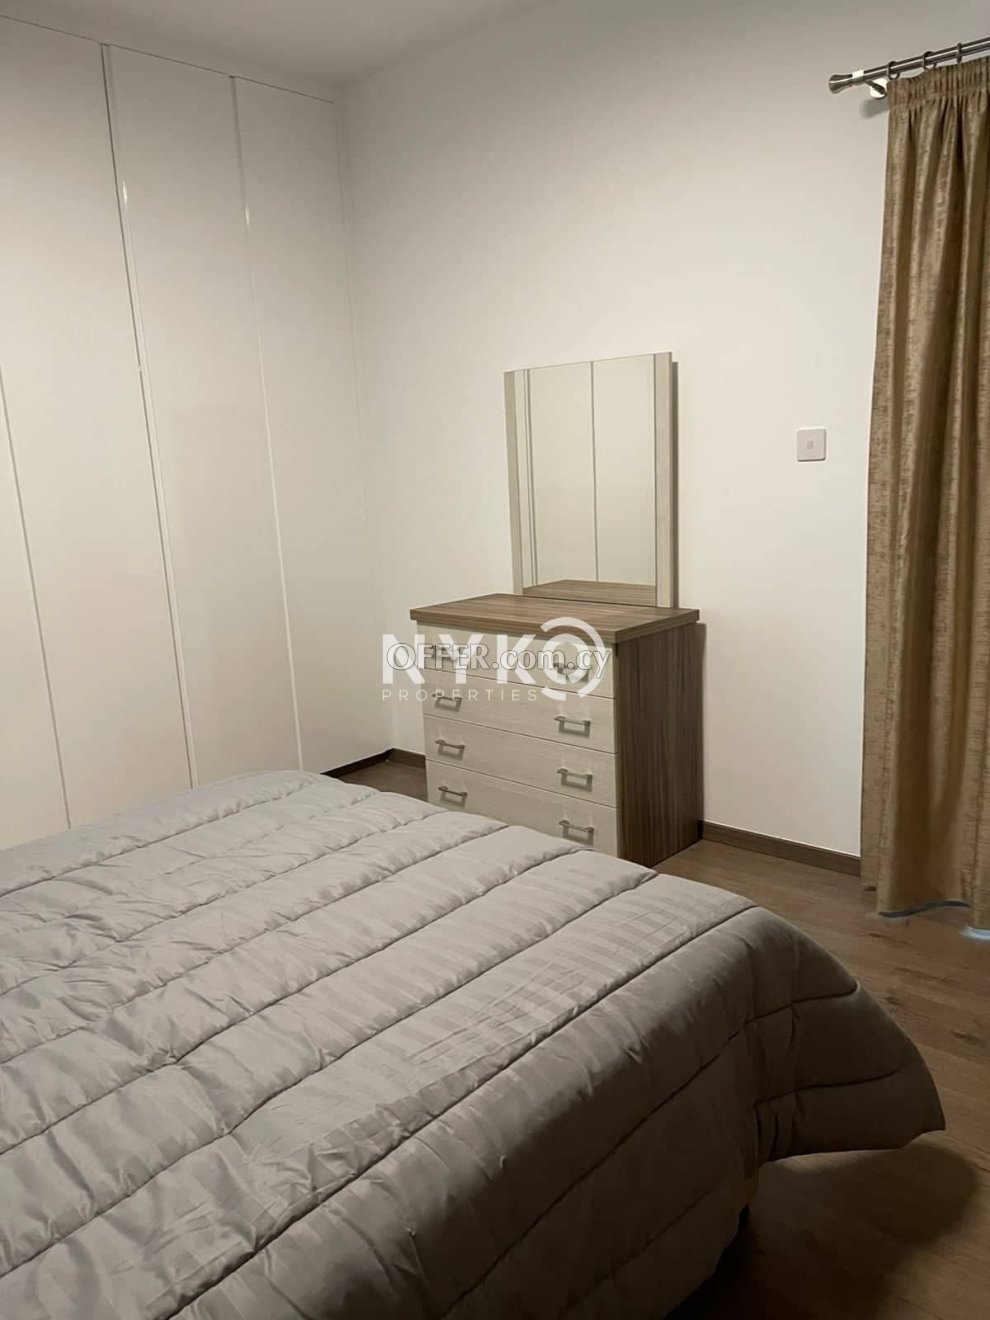 3 bedroom furnished apartment - 8